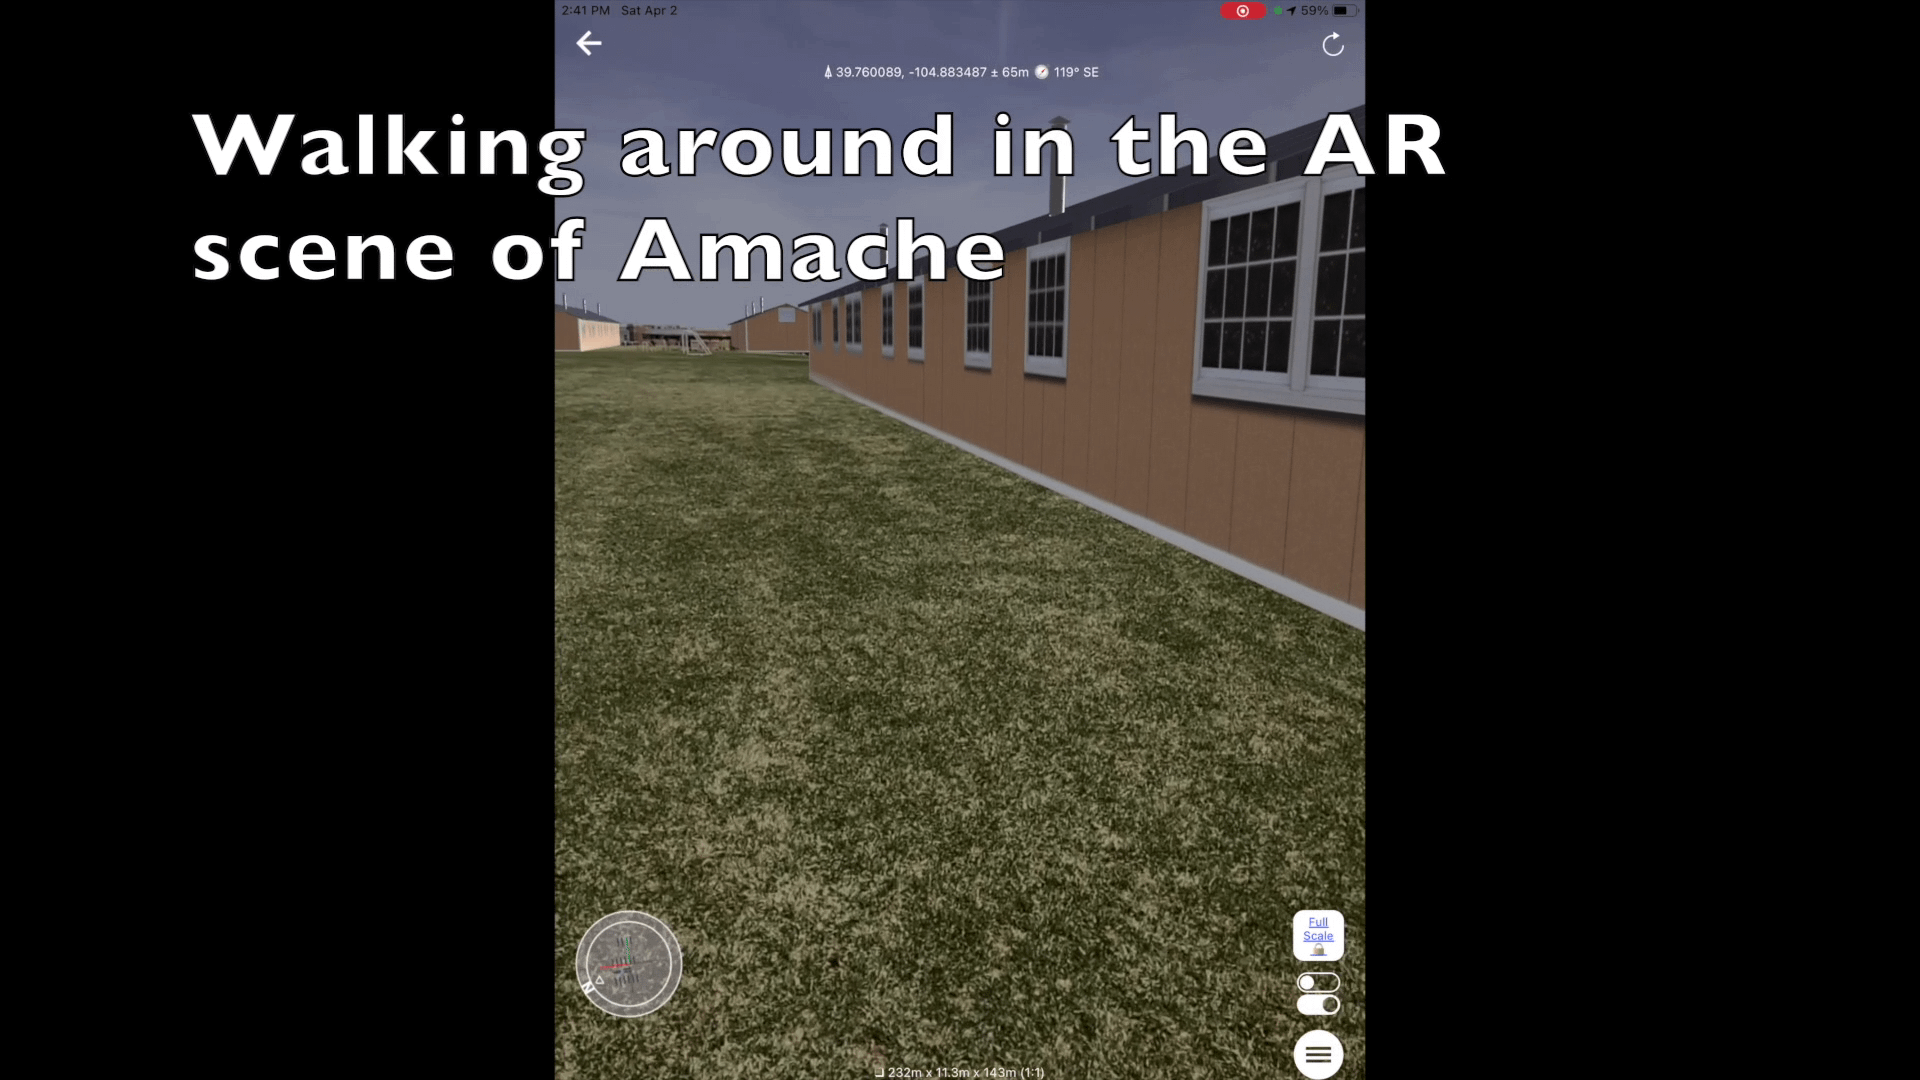 Amache AR full scale